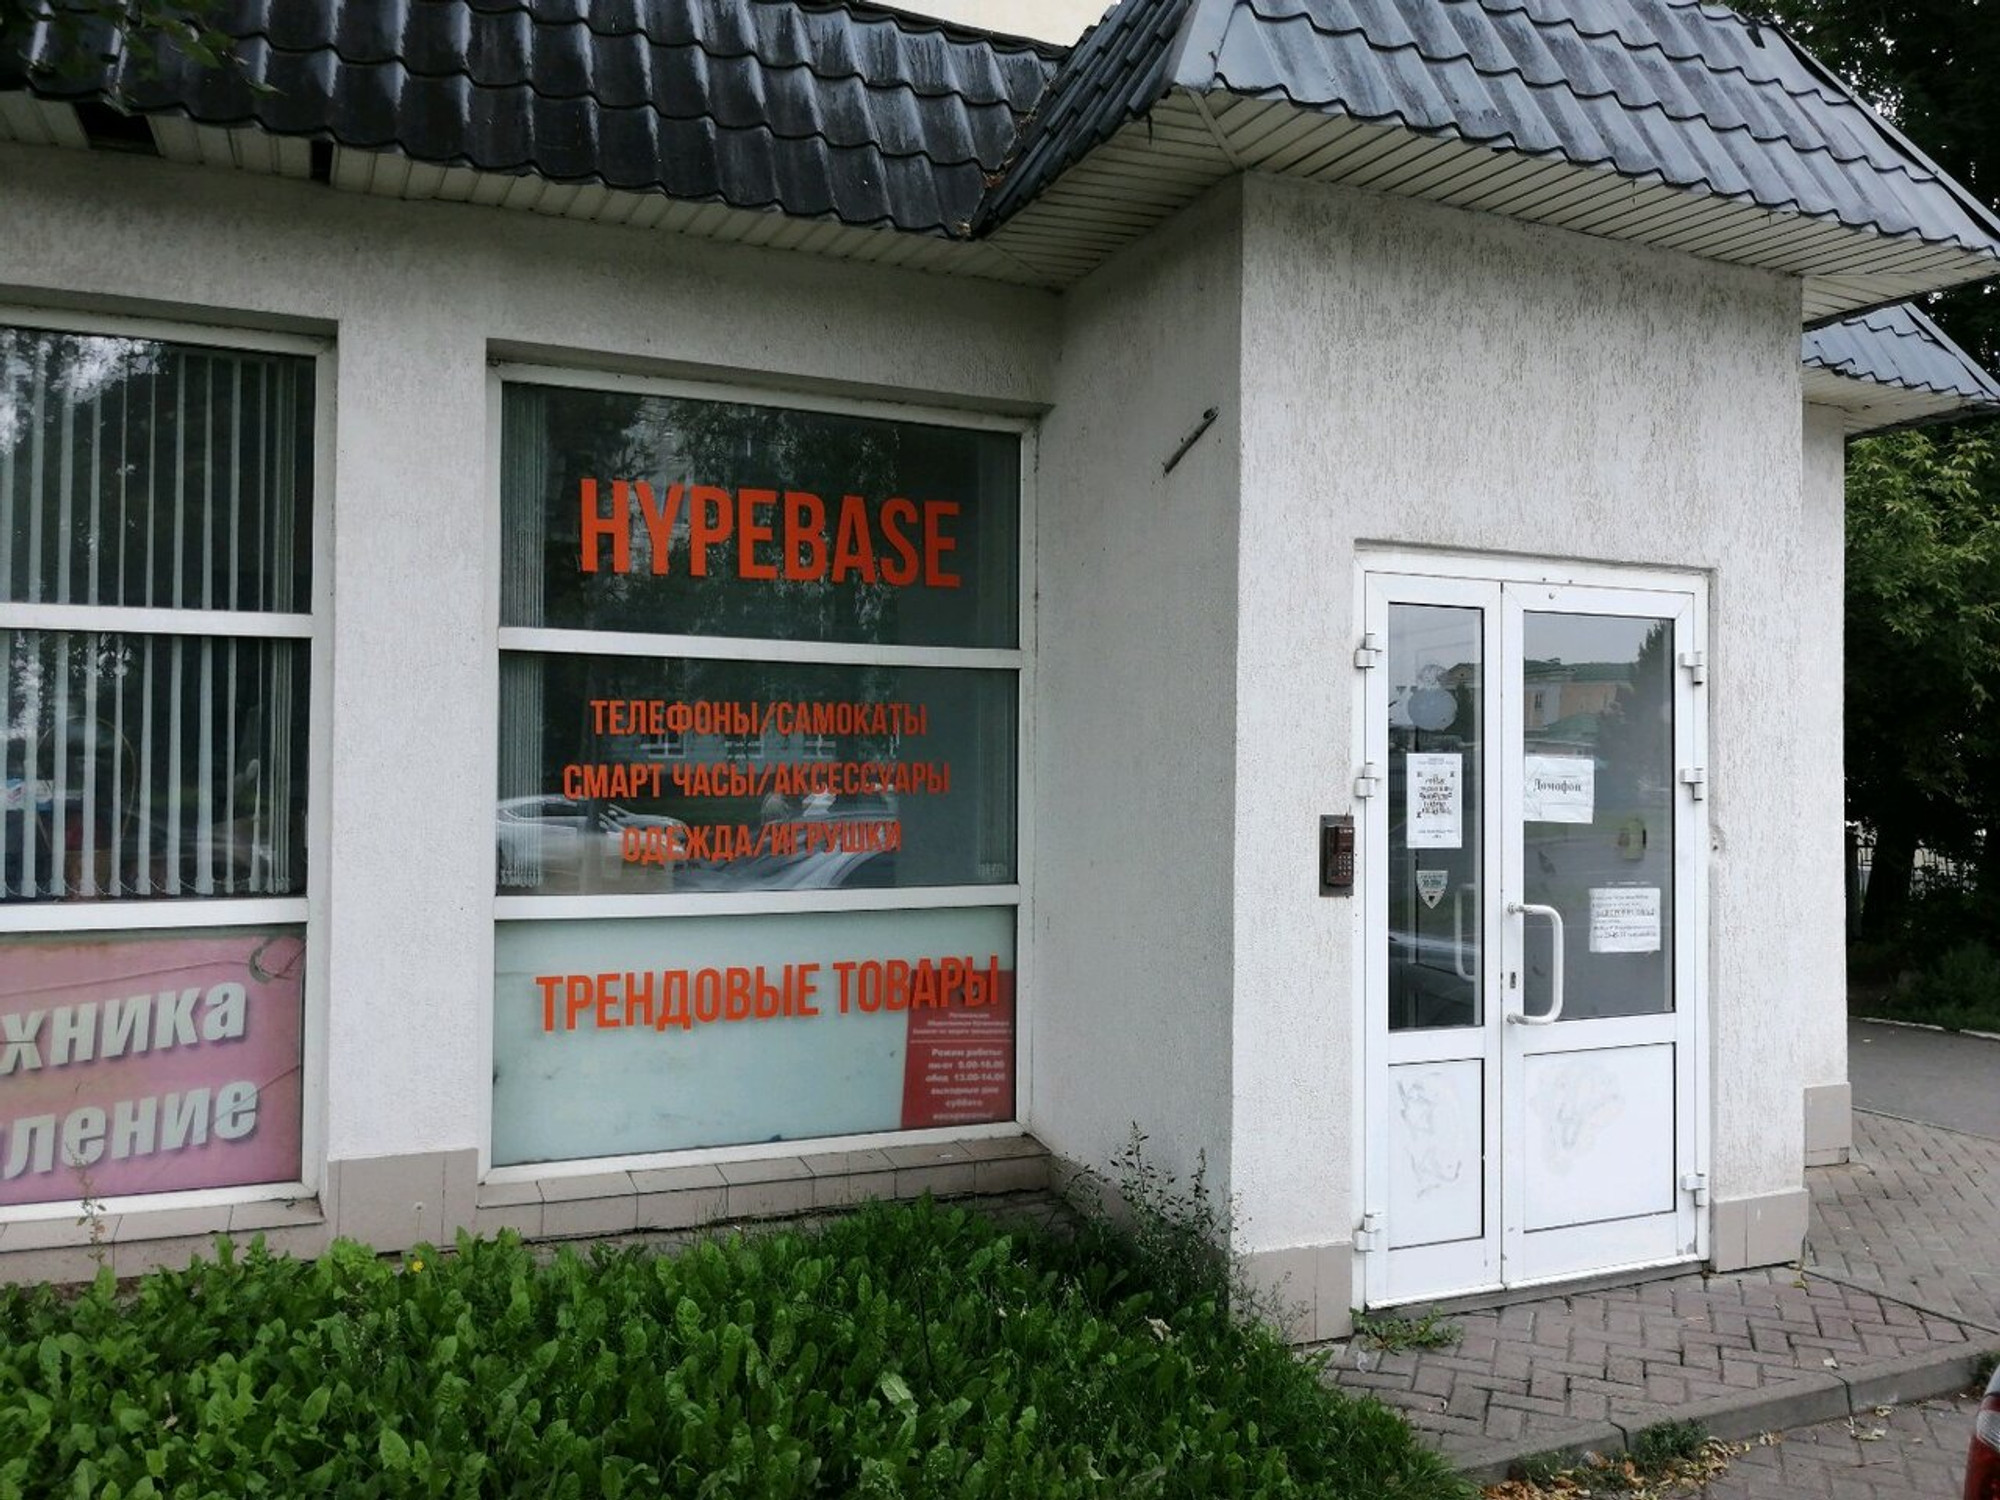 Hype Base Express (Интернет-магазин )